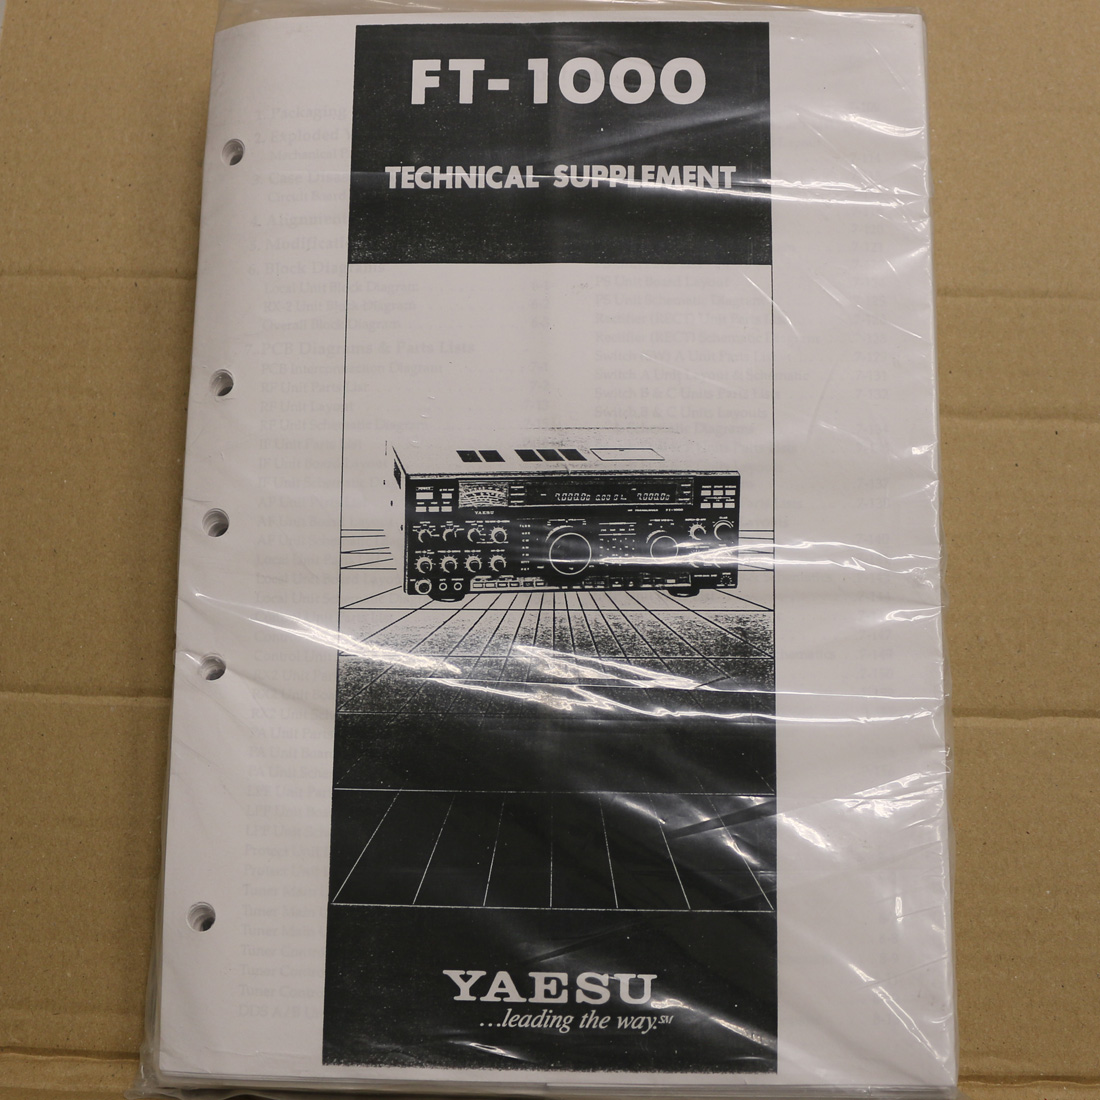 Yaesu FT-1000 Technical Supplement